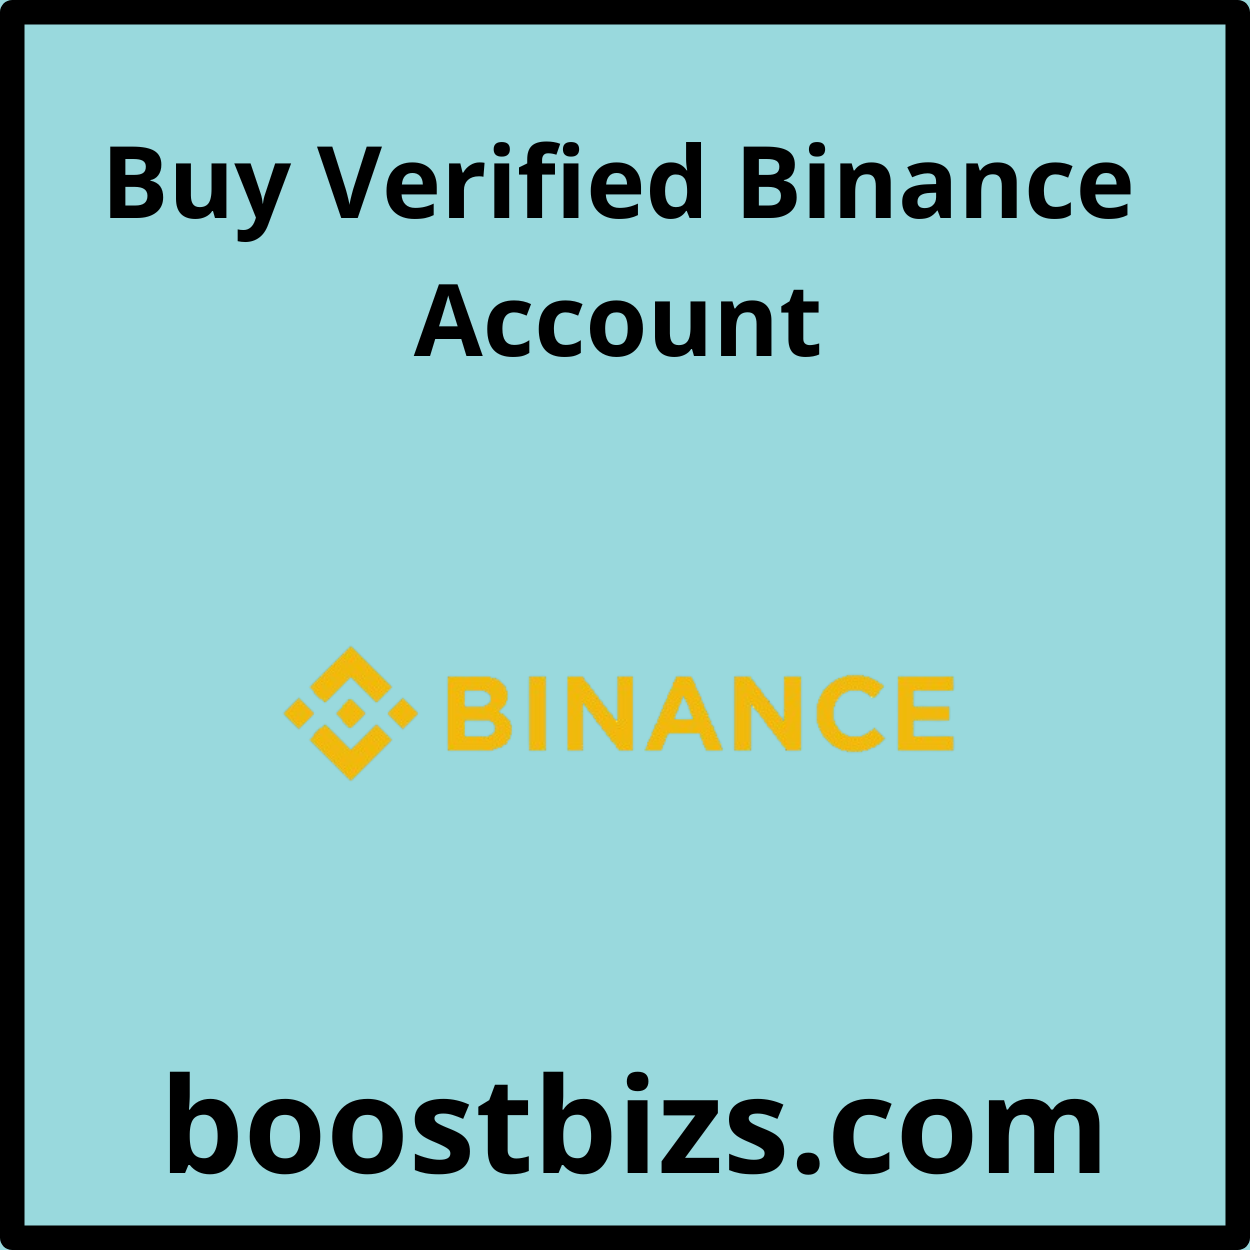 Buy Verified Binance Accounts - BOOSTBIZS